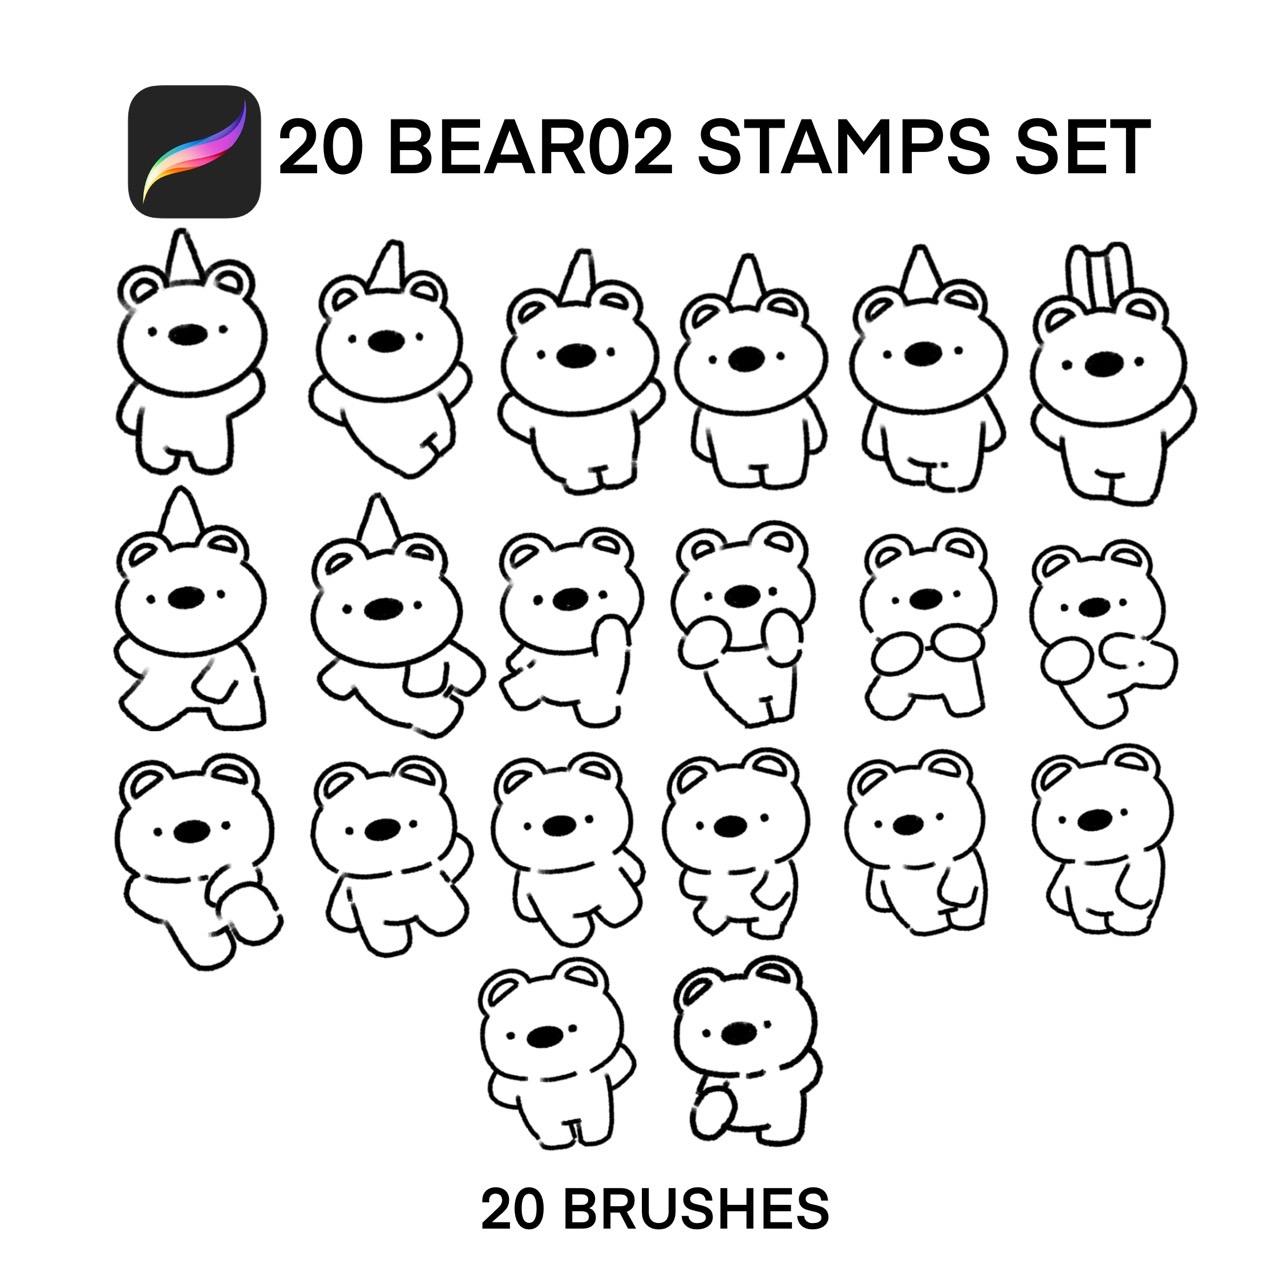 20 BEAR02 STAMPS SET